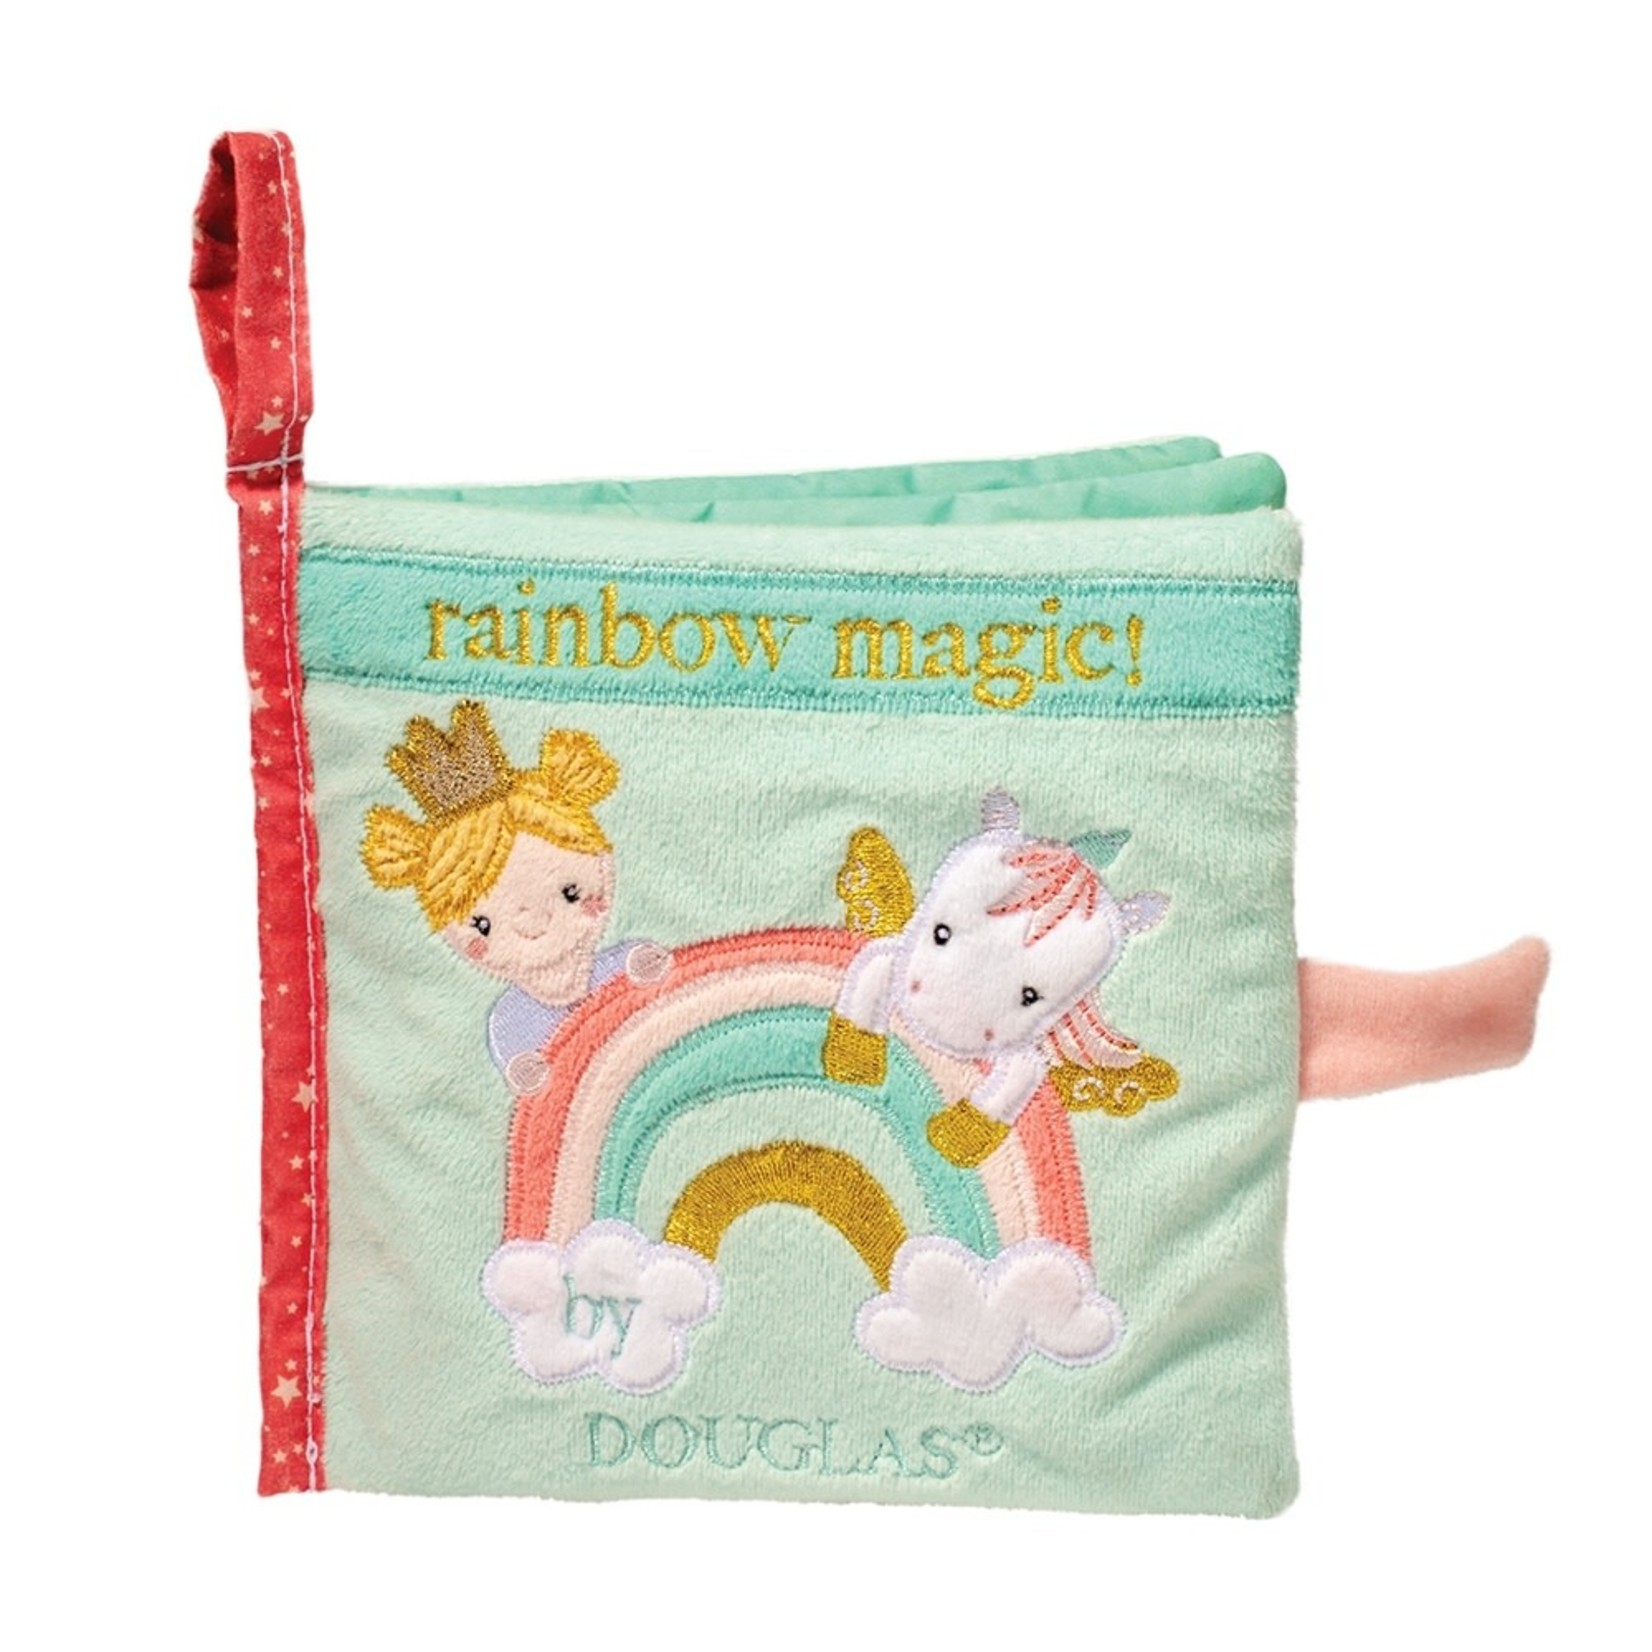 Douglas Toys Rainbow Magic Activity Book